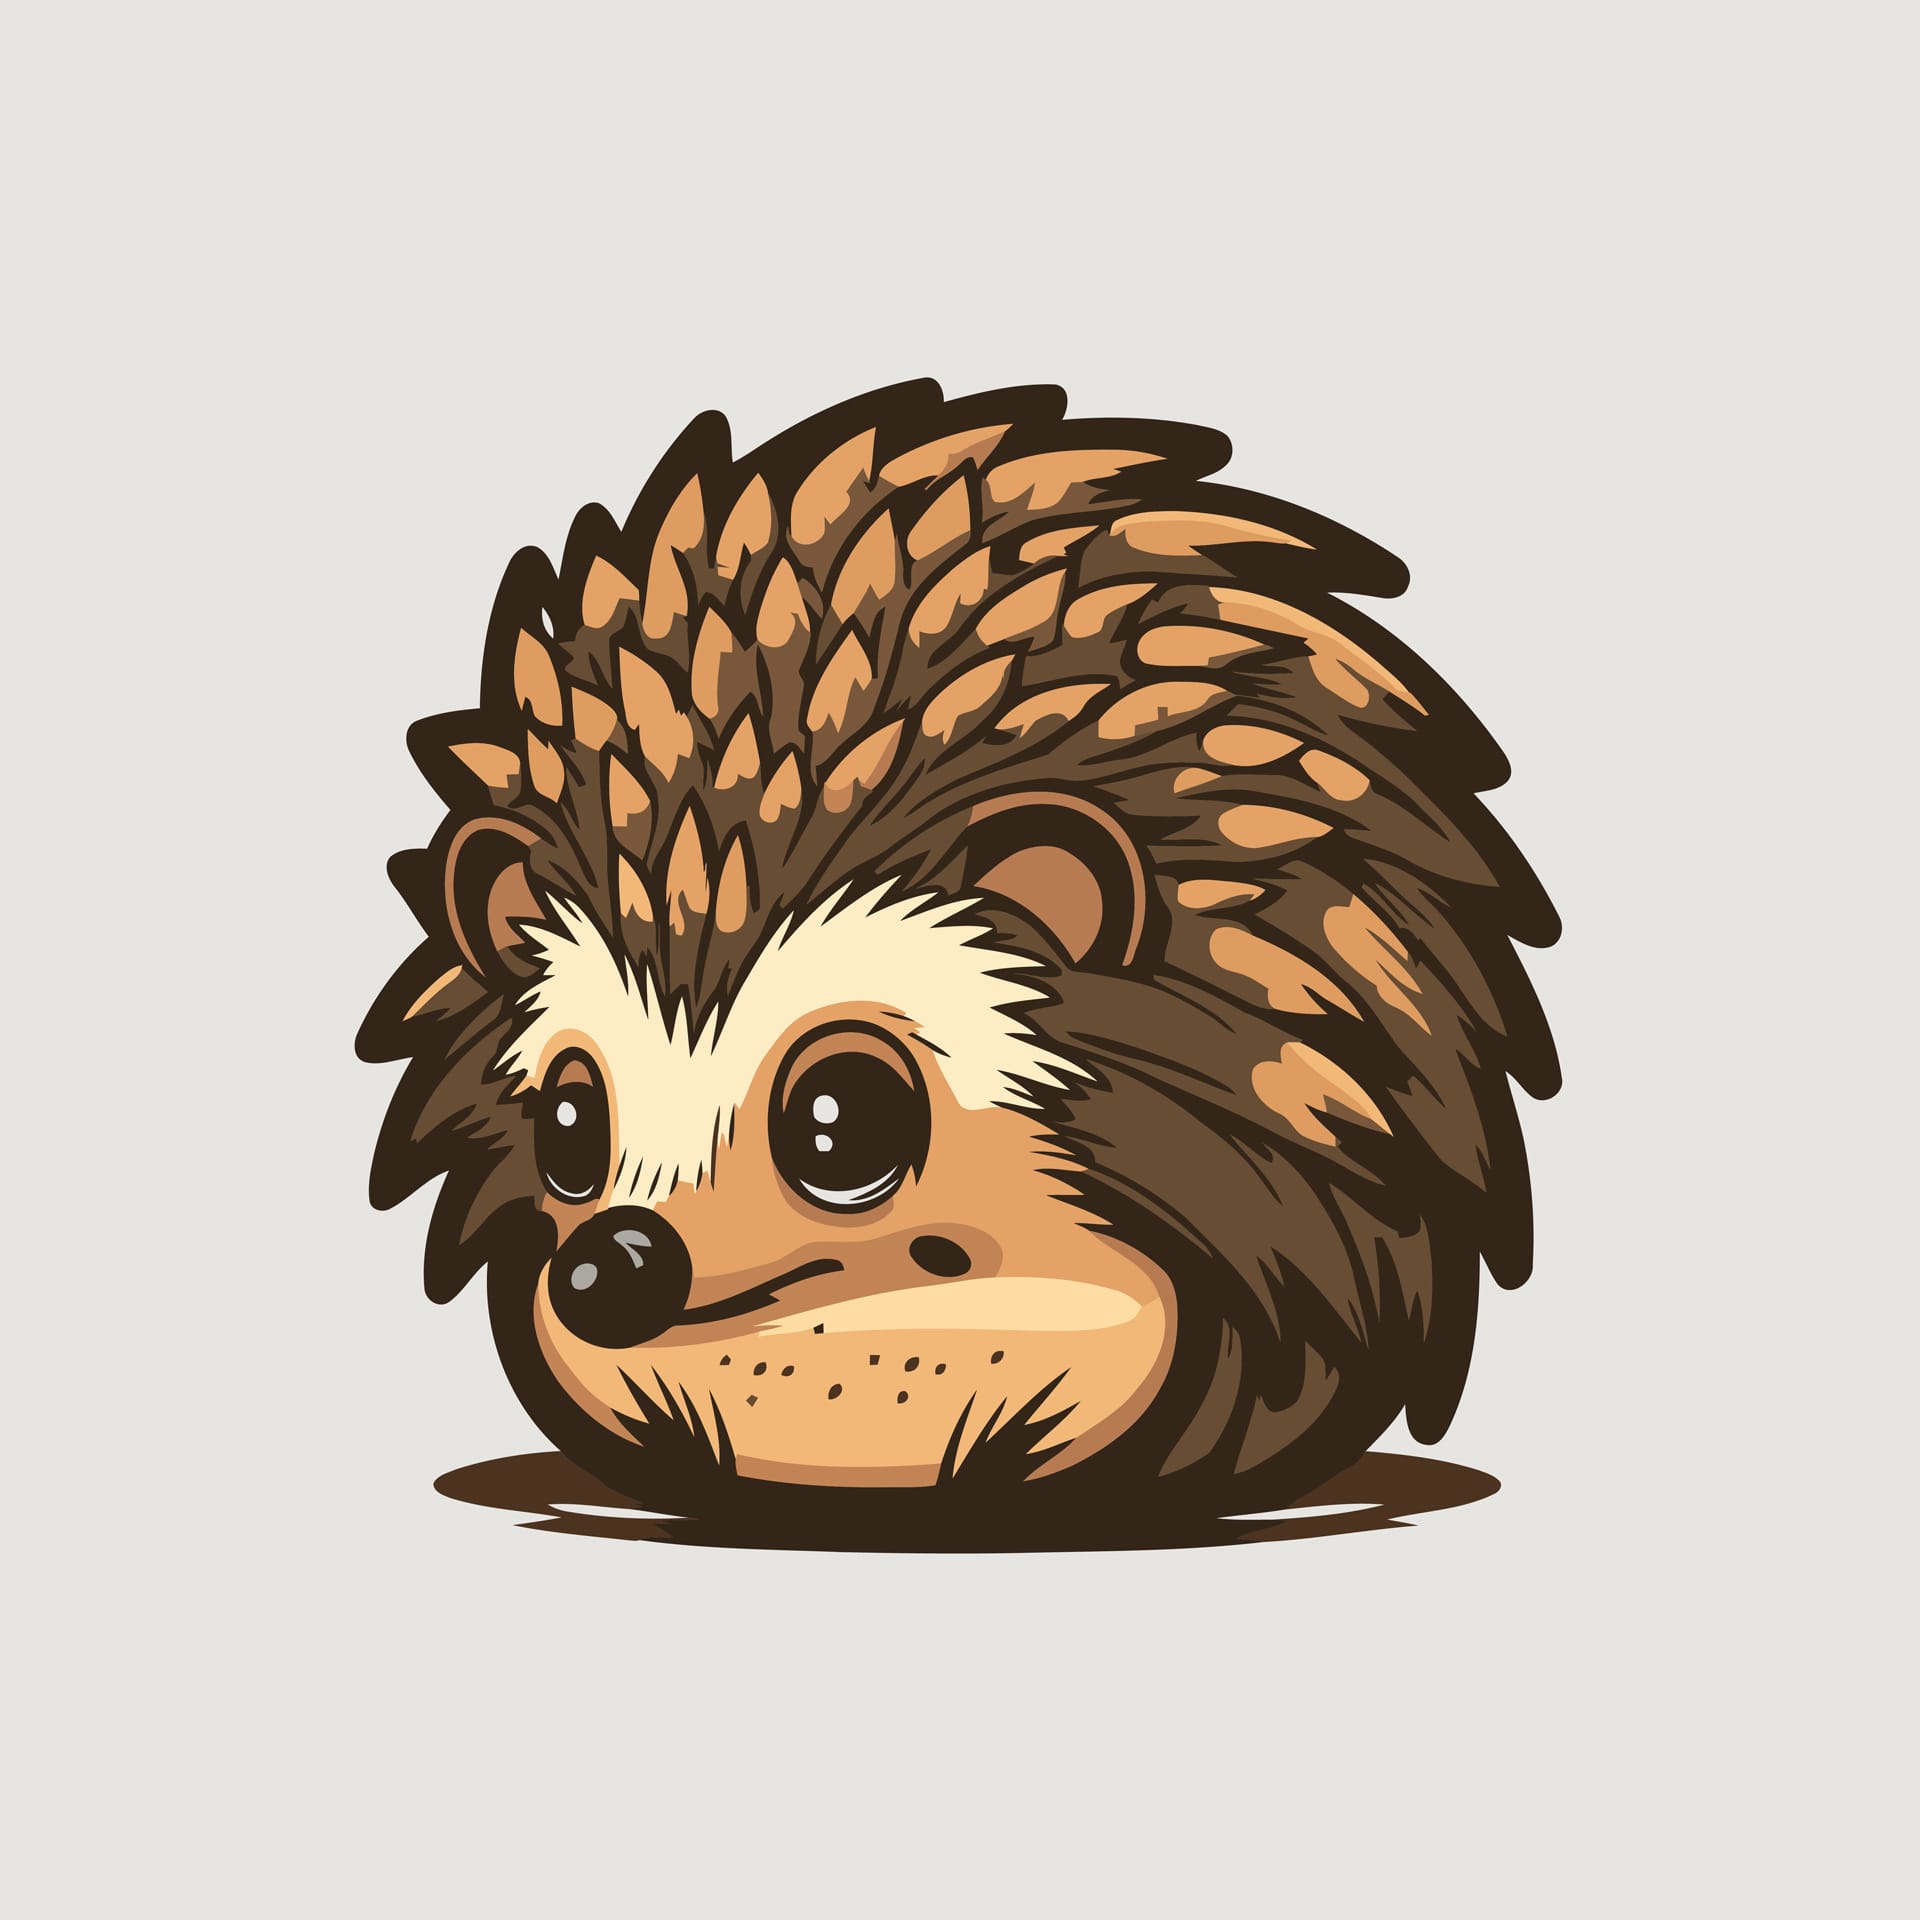 Hedgehog head logo design illustration isolated cute cartoon hedgehog